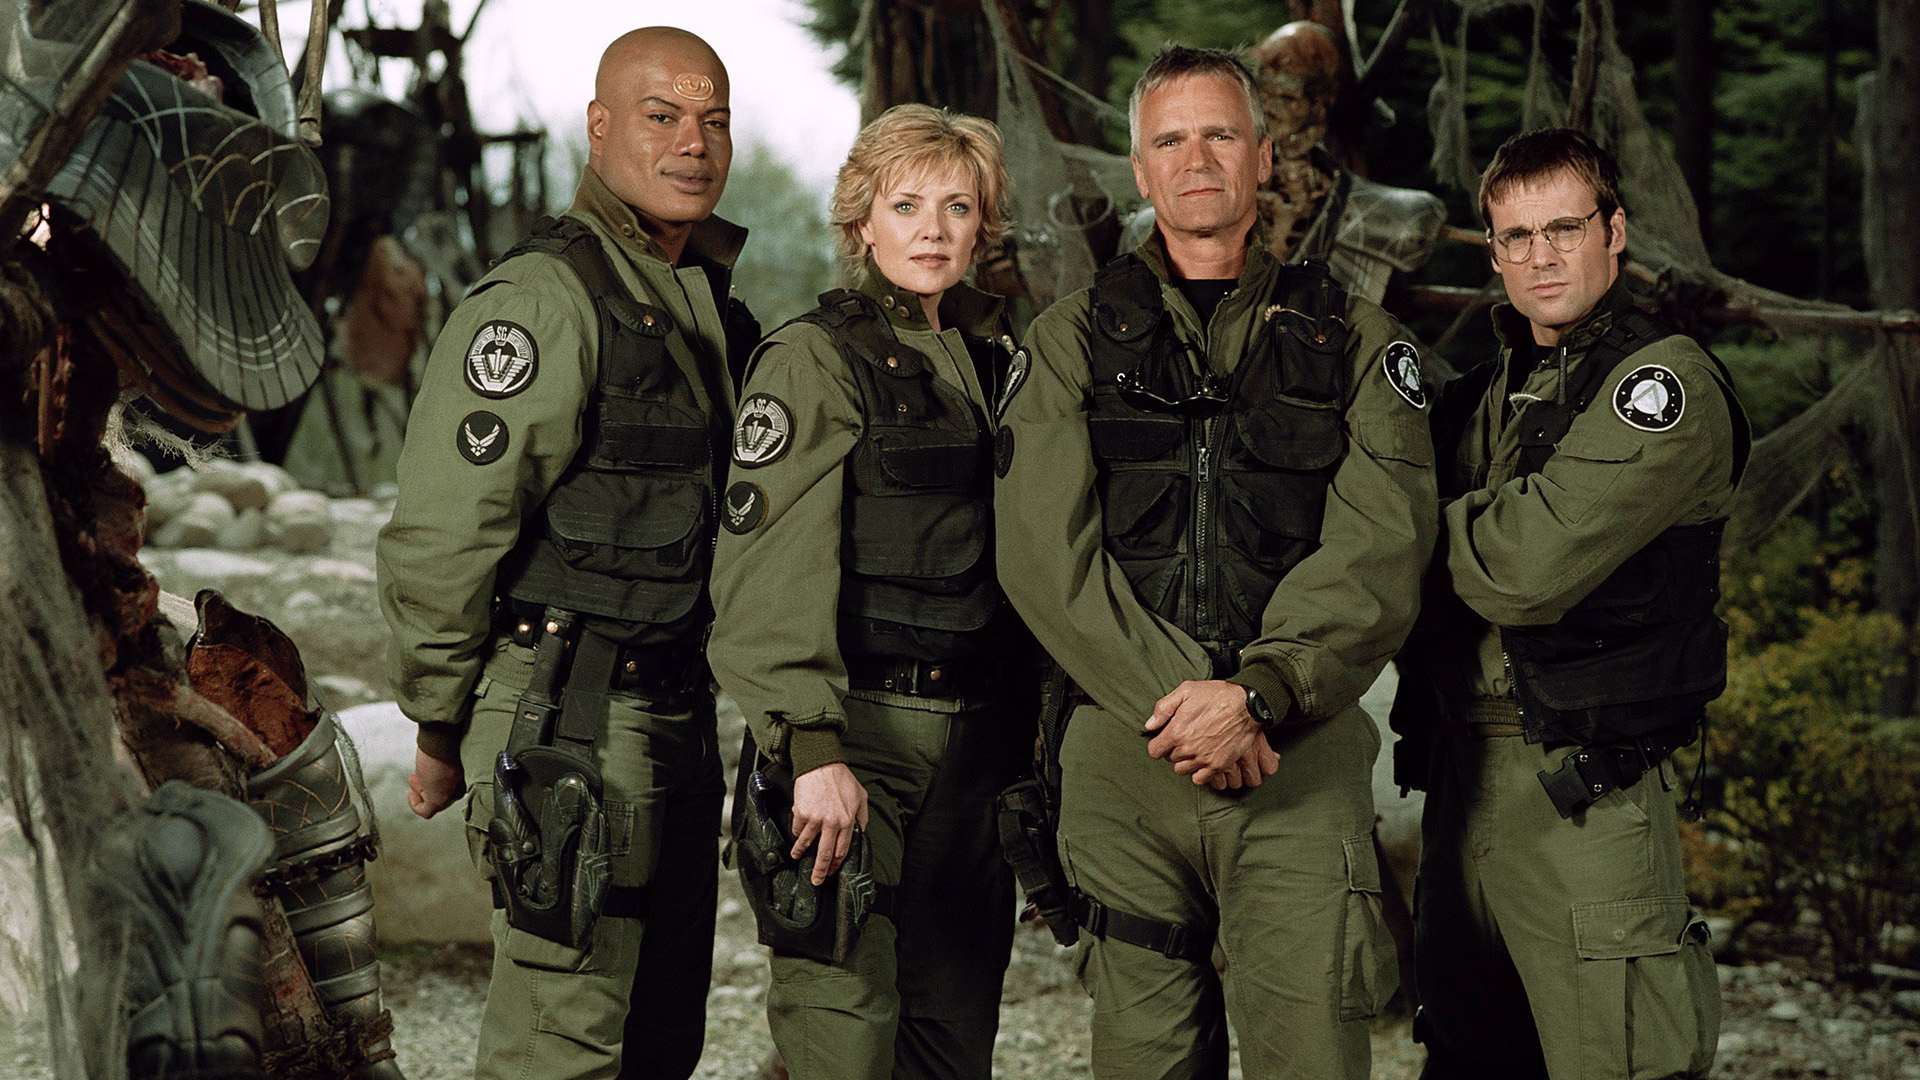 TV Show Stargate SG-1 HD Wallpaper